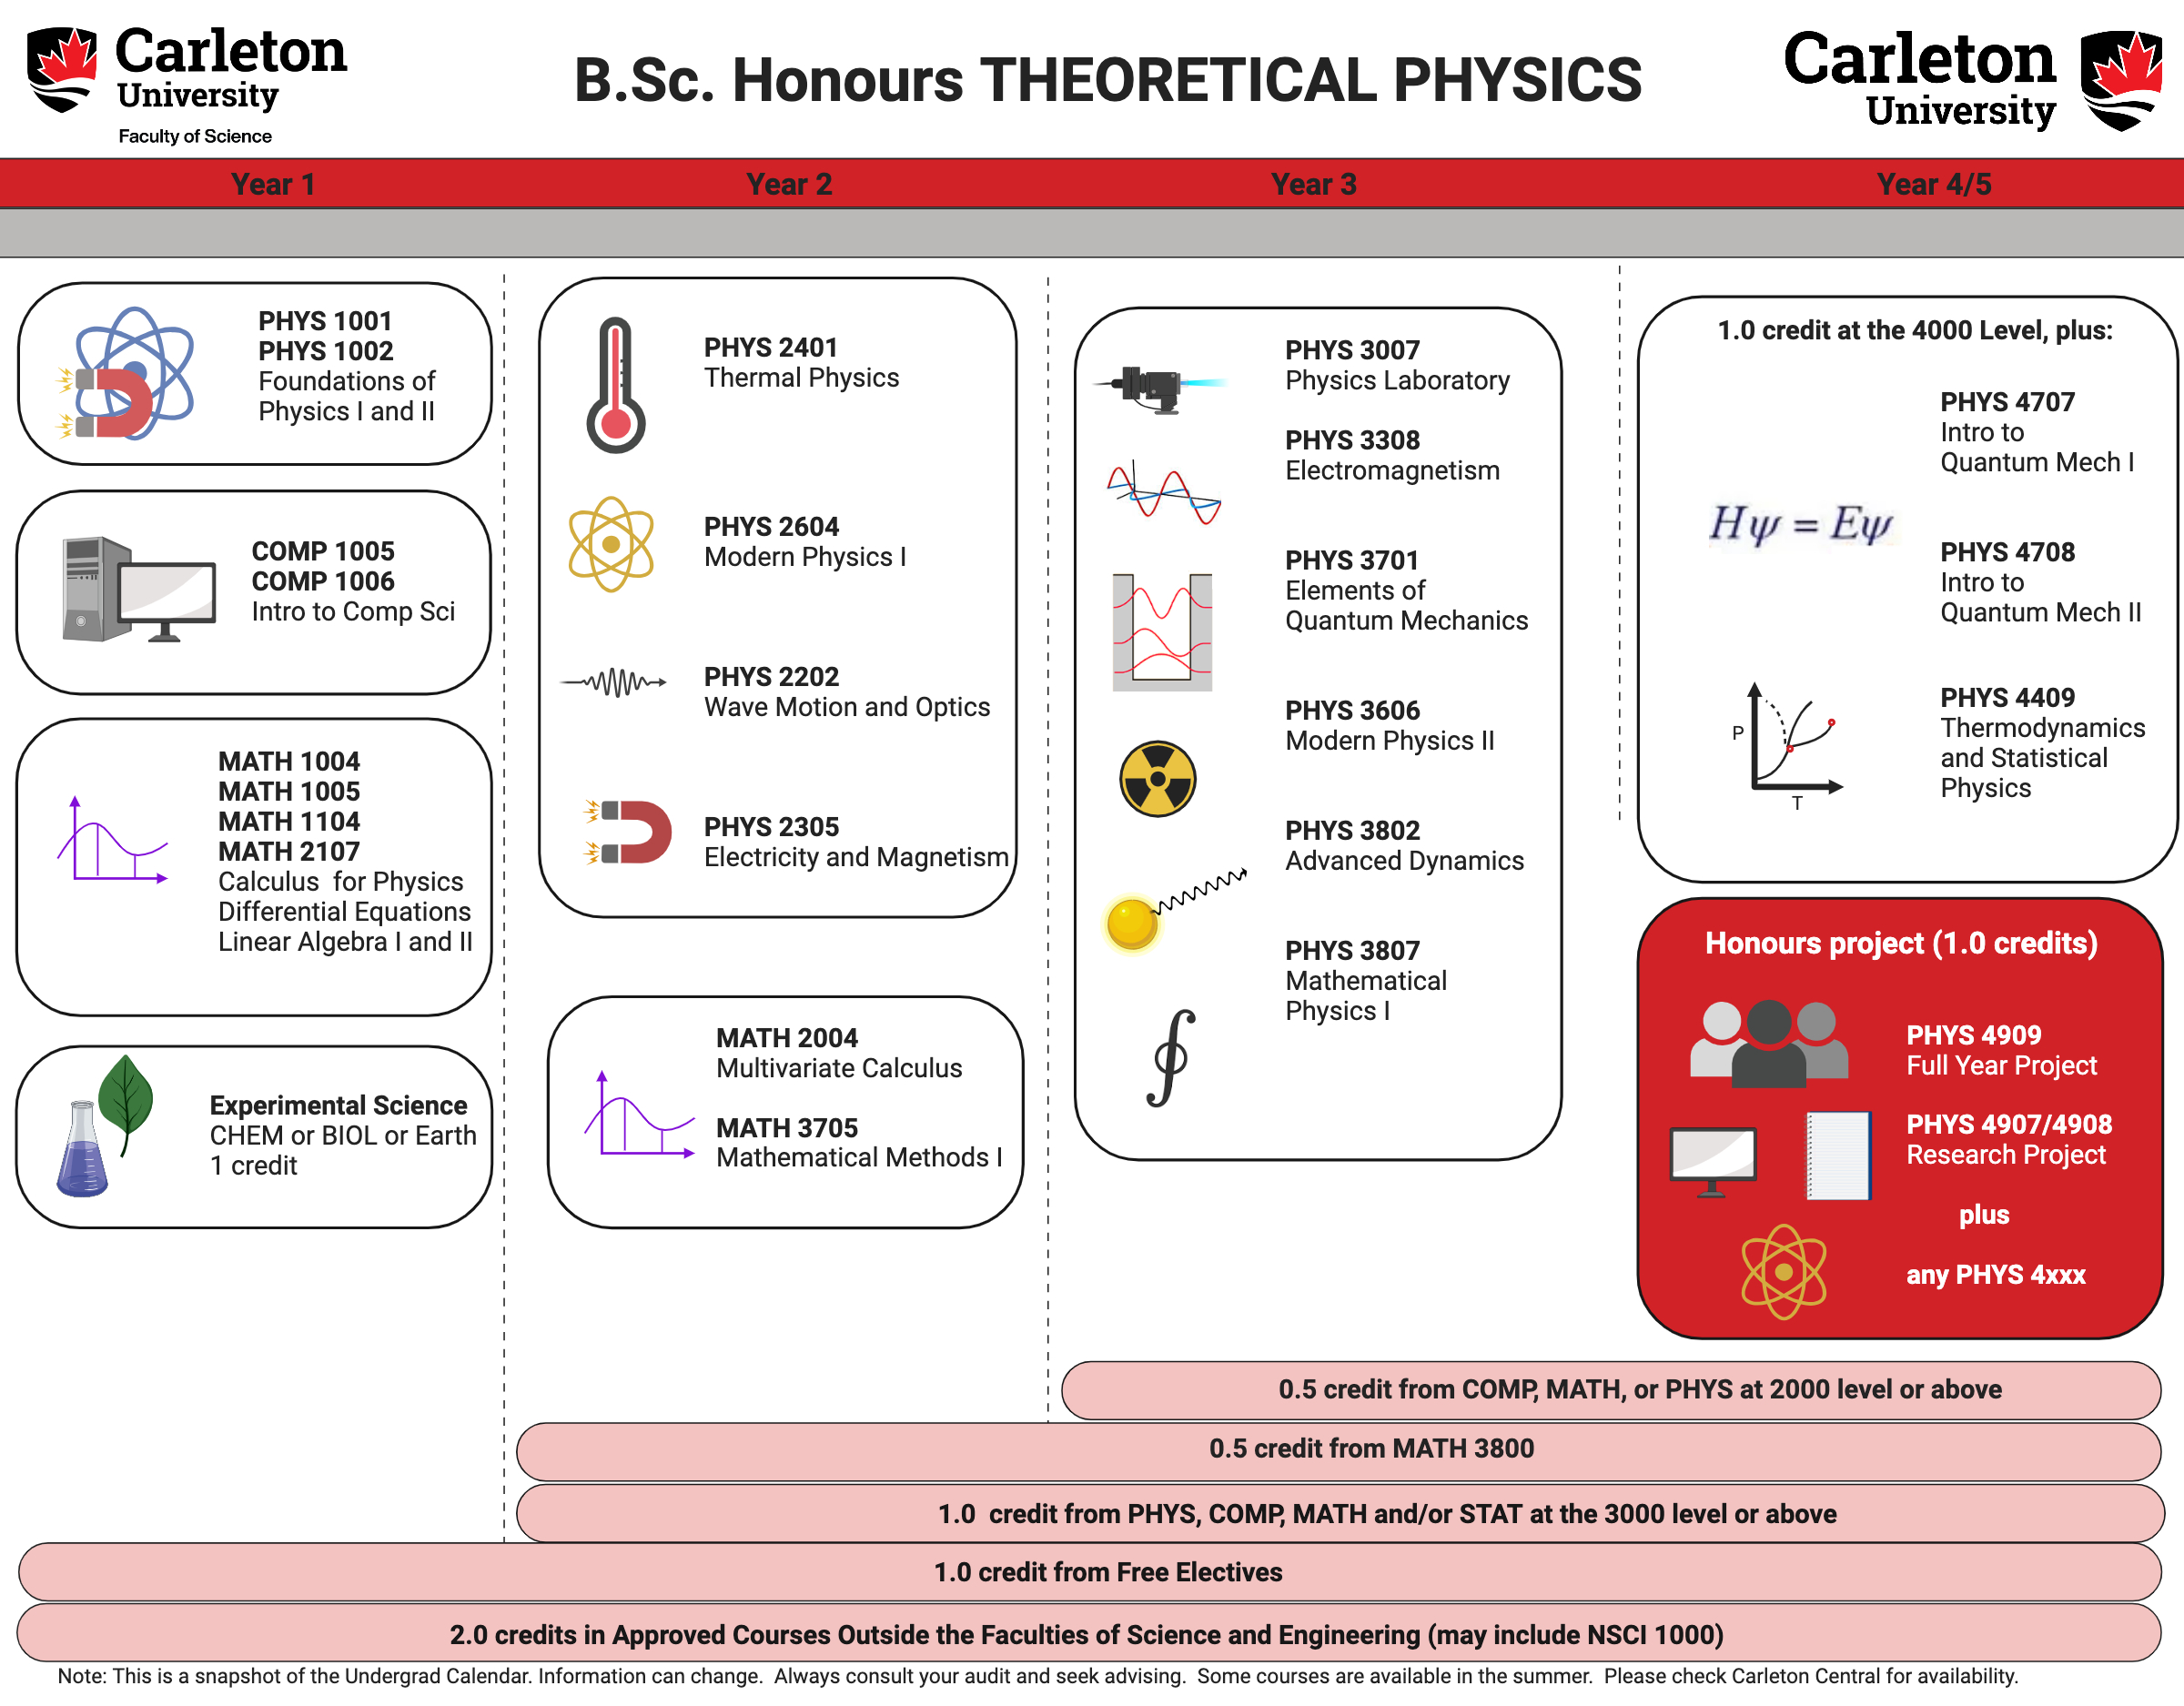 Theoretical Physics carleton course maps